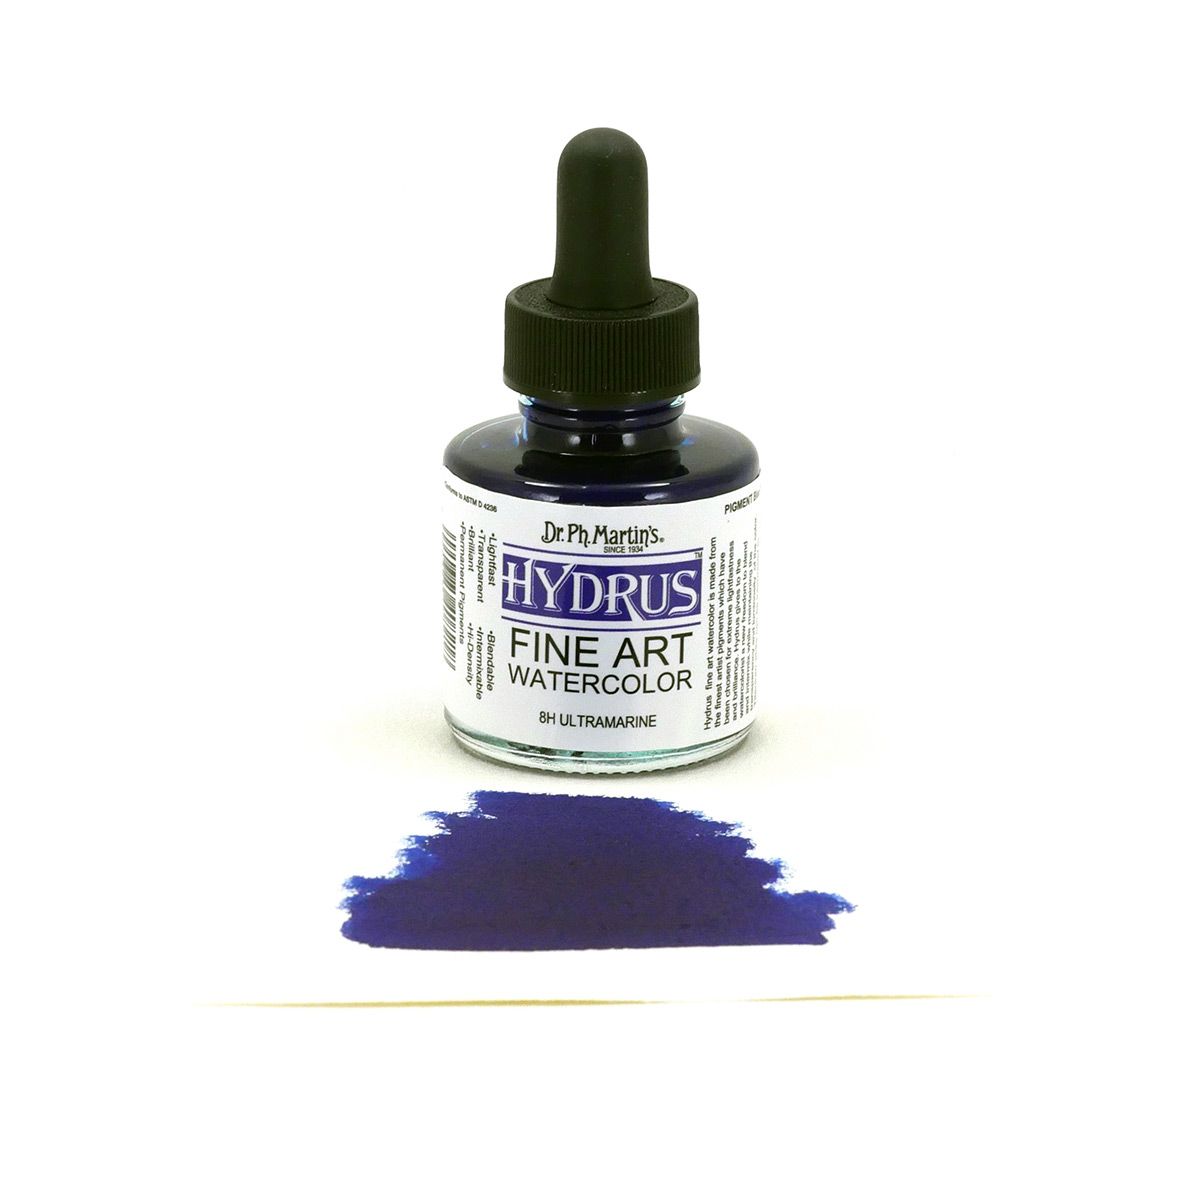 Hydrus Watercolor 1 oz Bottle - Ultramarine